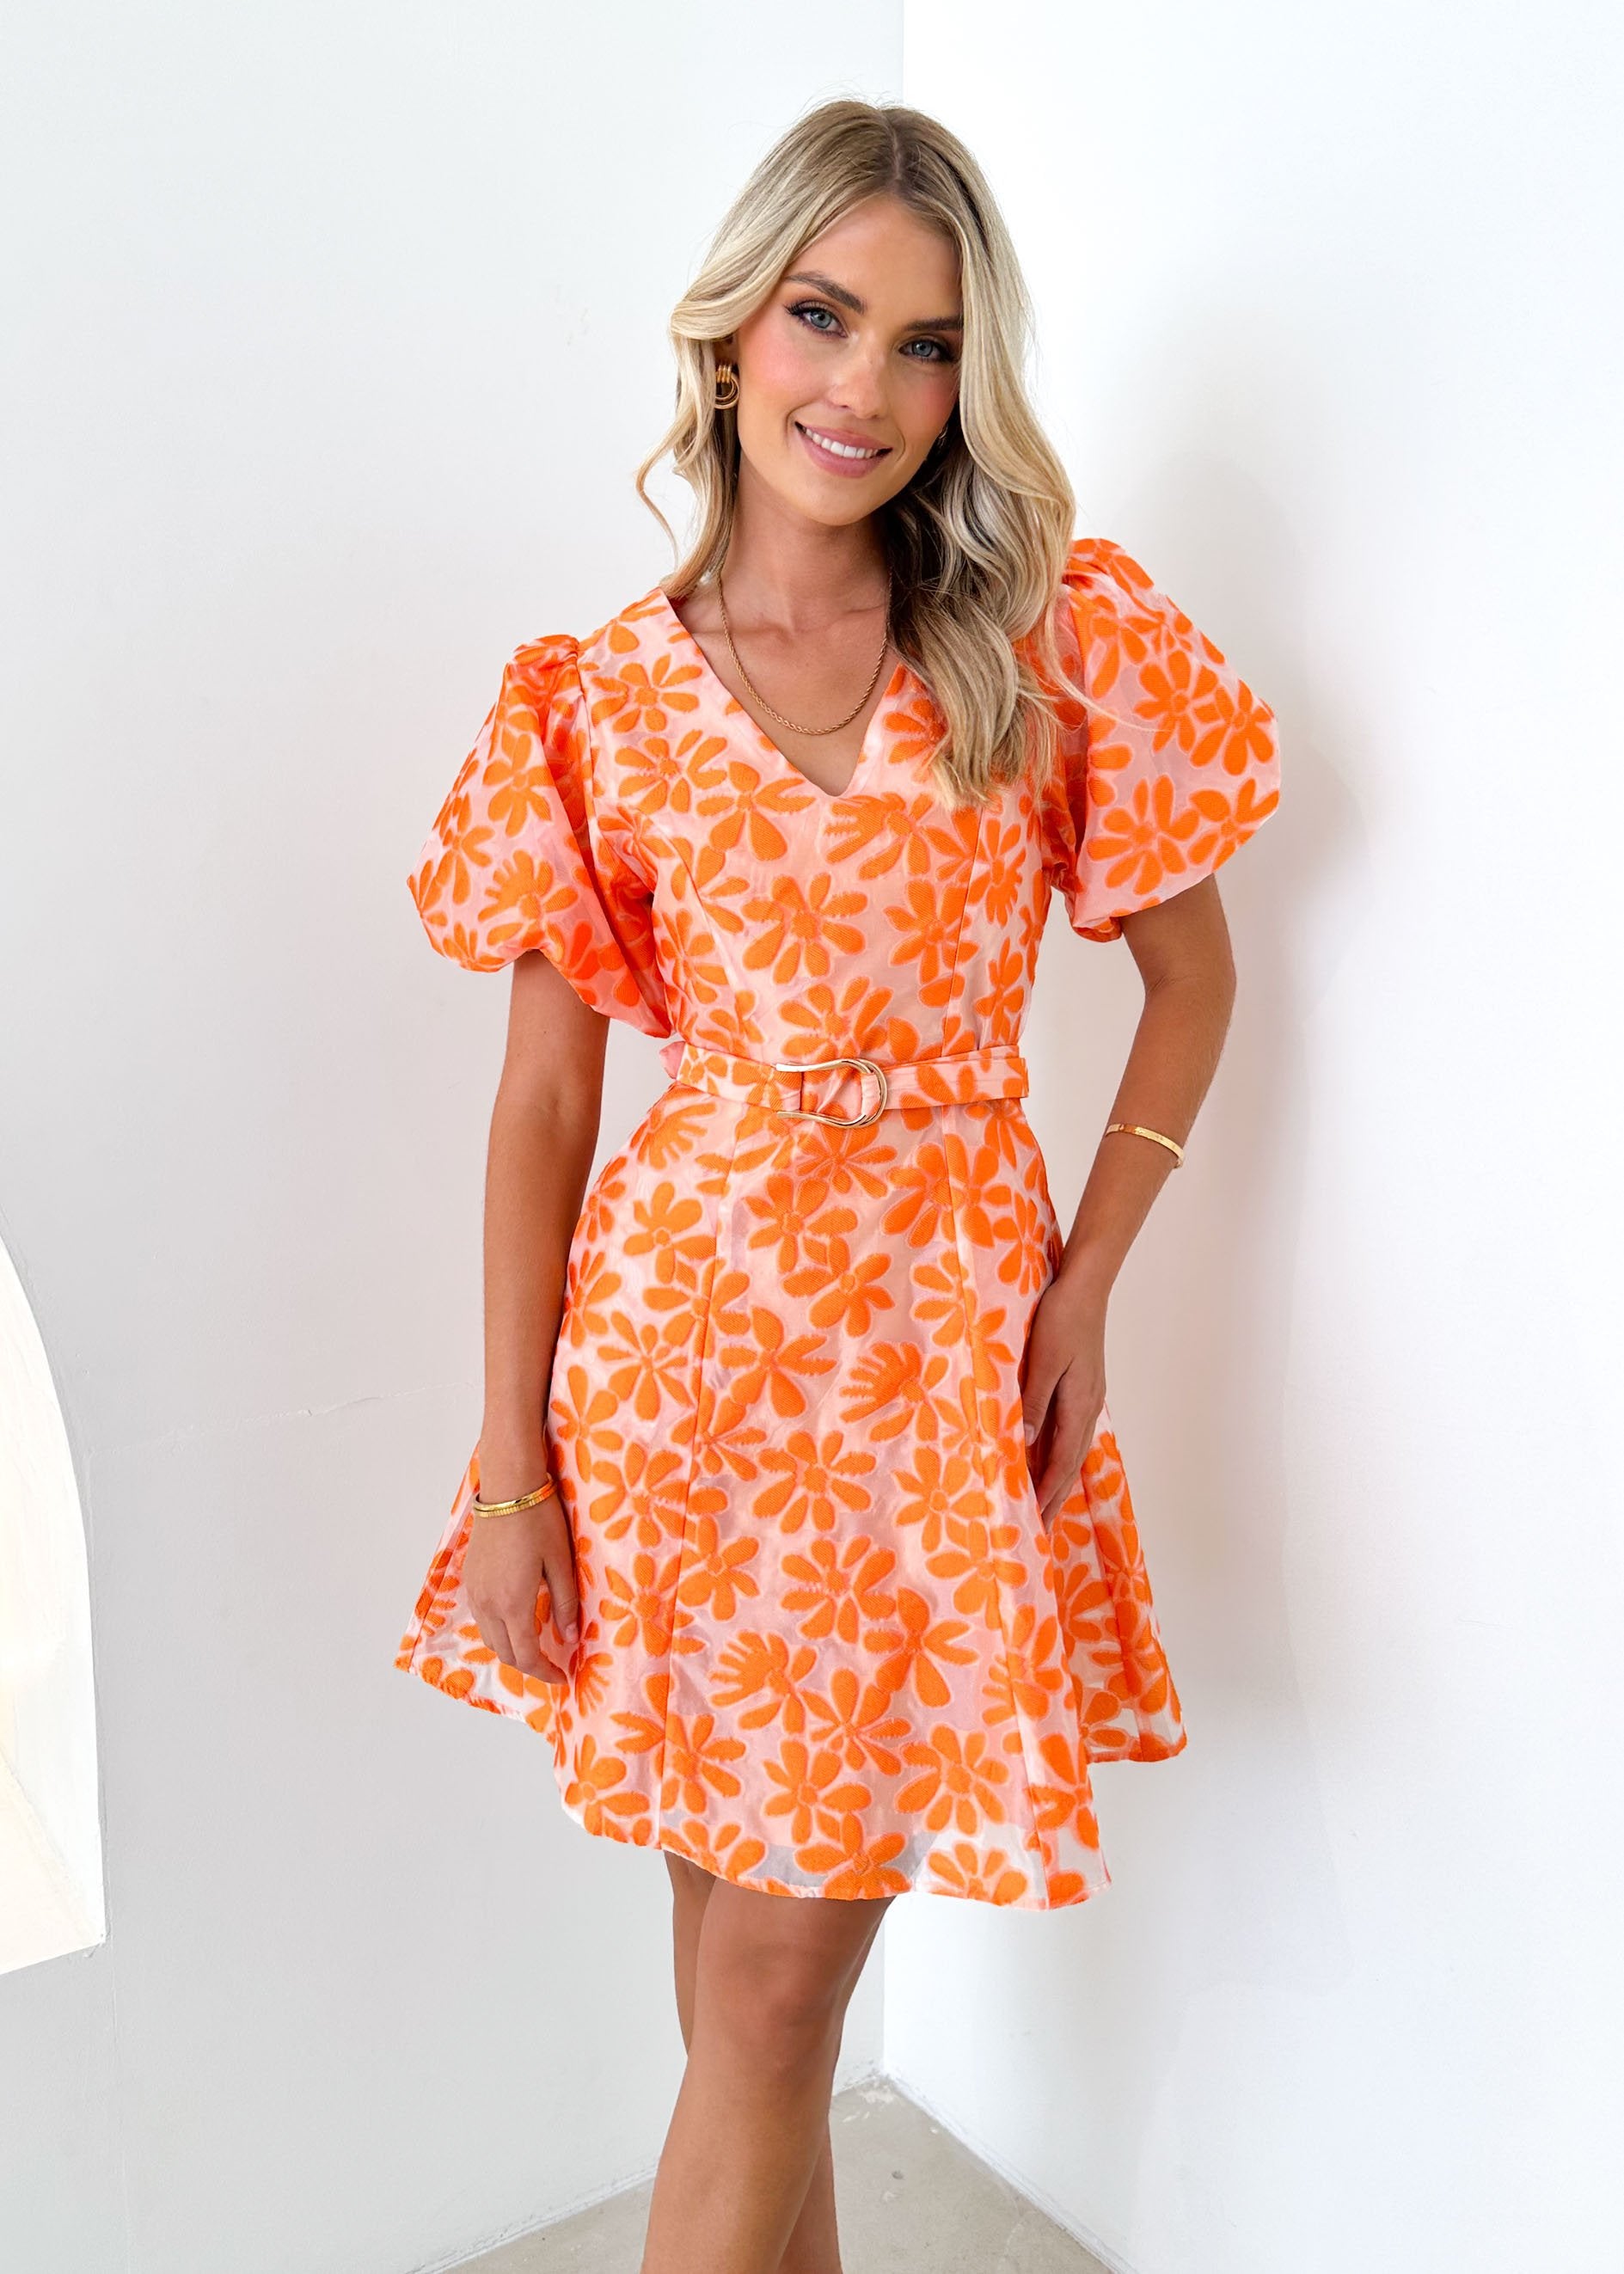 Jaylim Dress - Orange Flowers